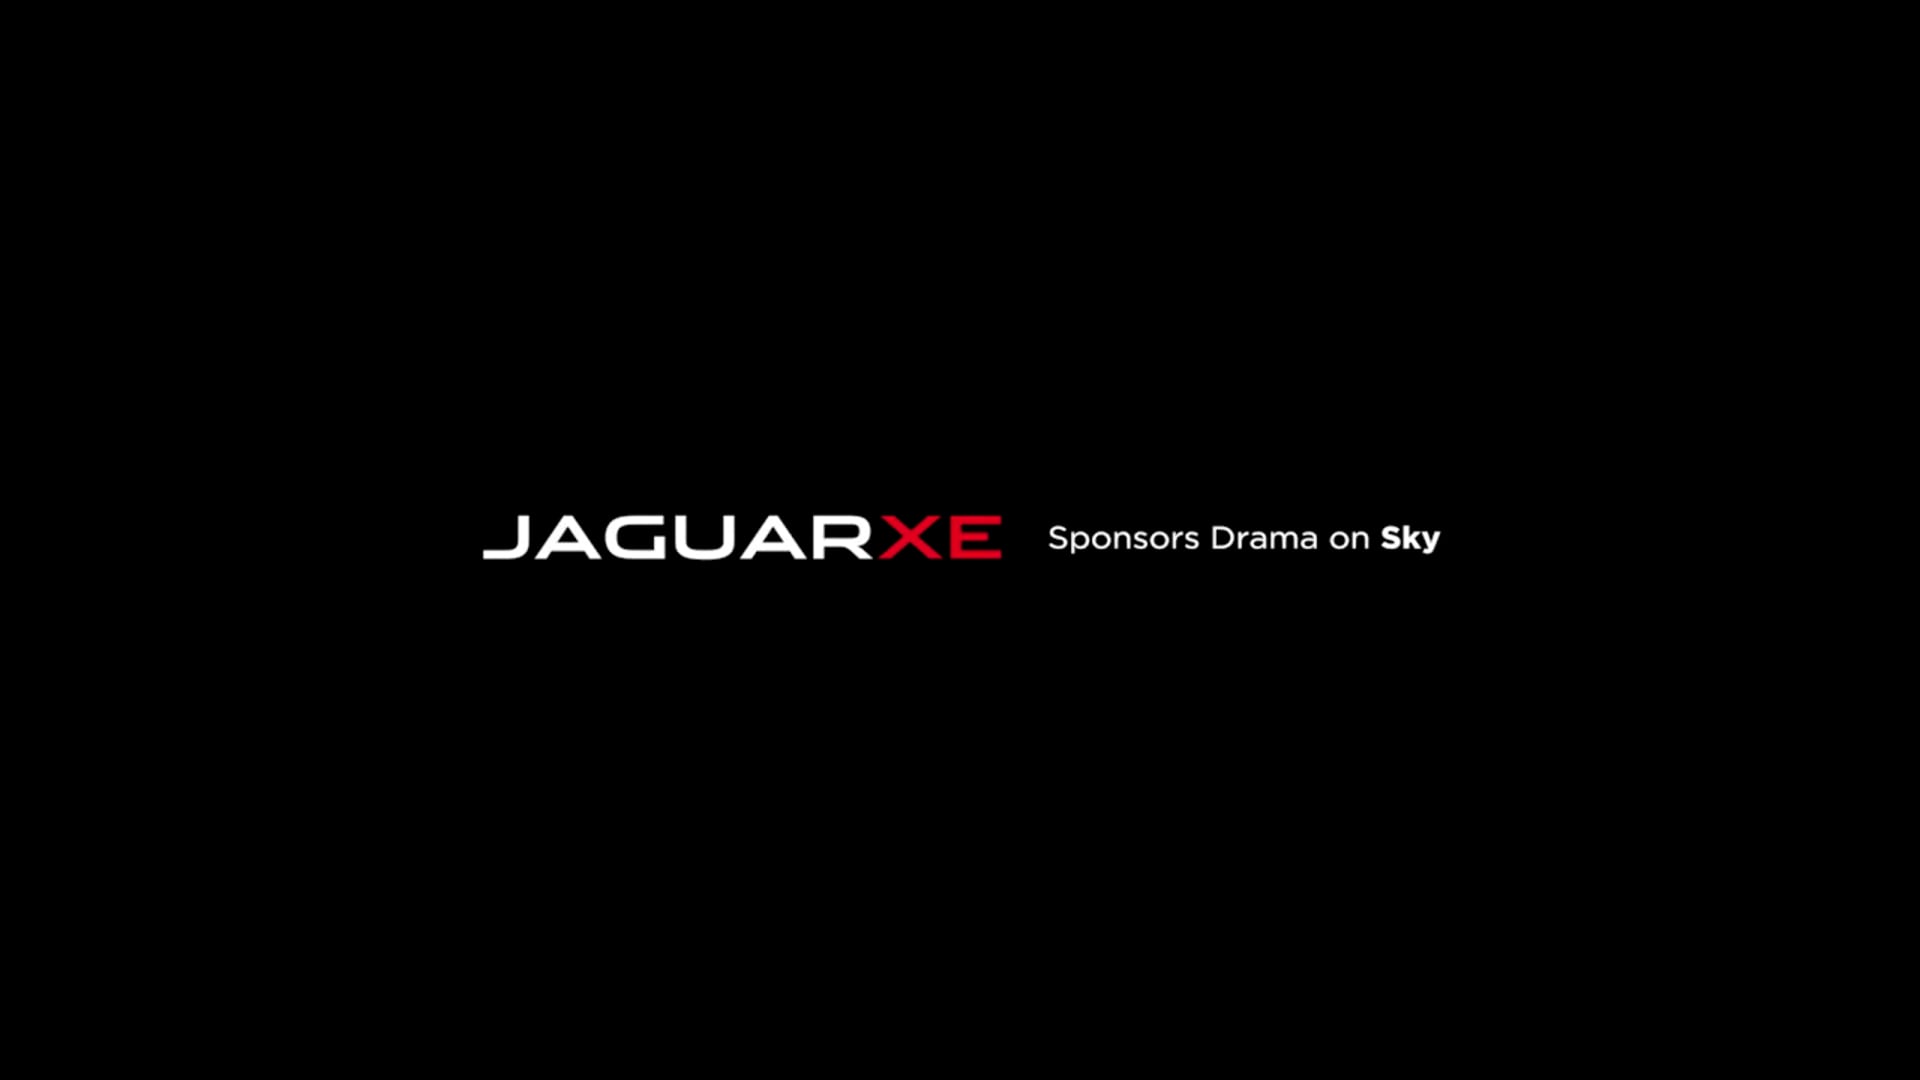 Jaguar | "Sky Drama"